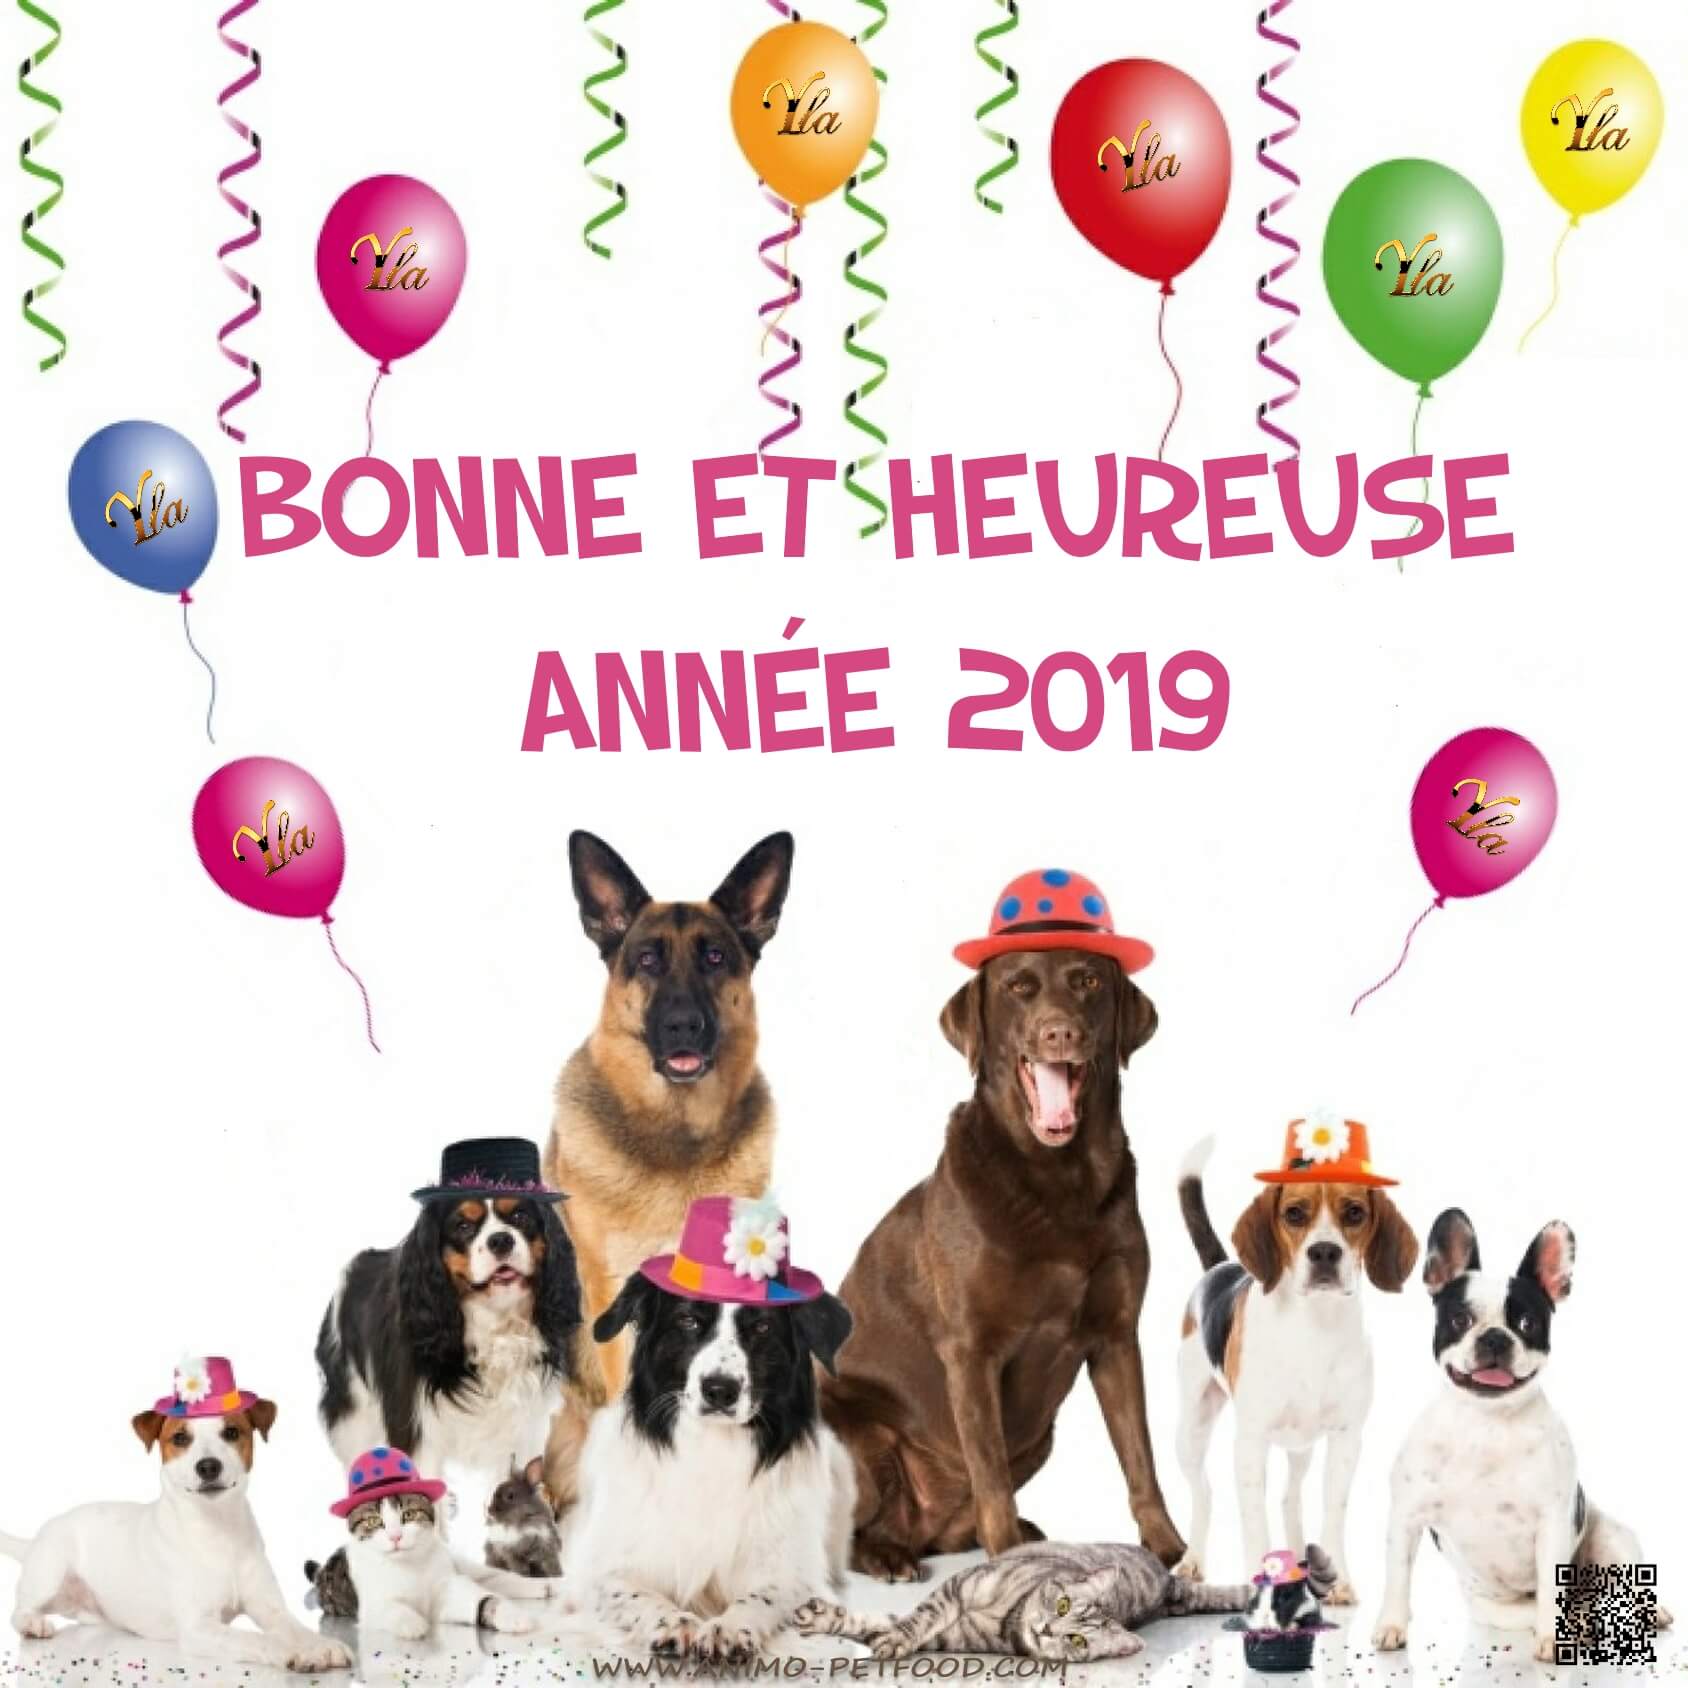 Bonne année 2019- Animo Petfood